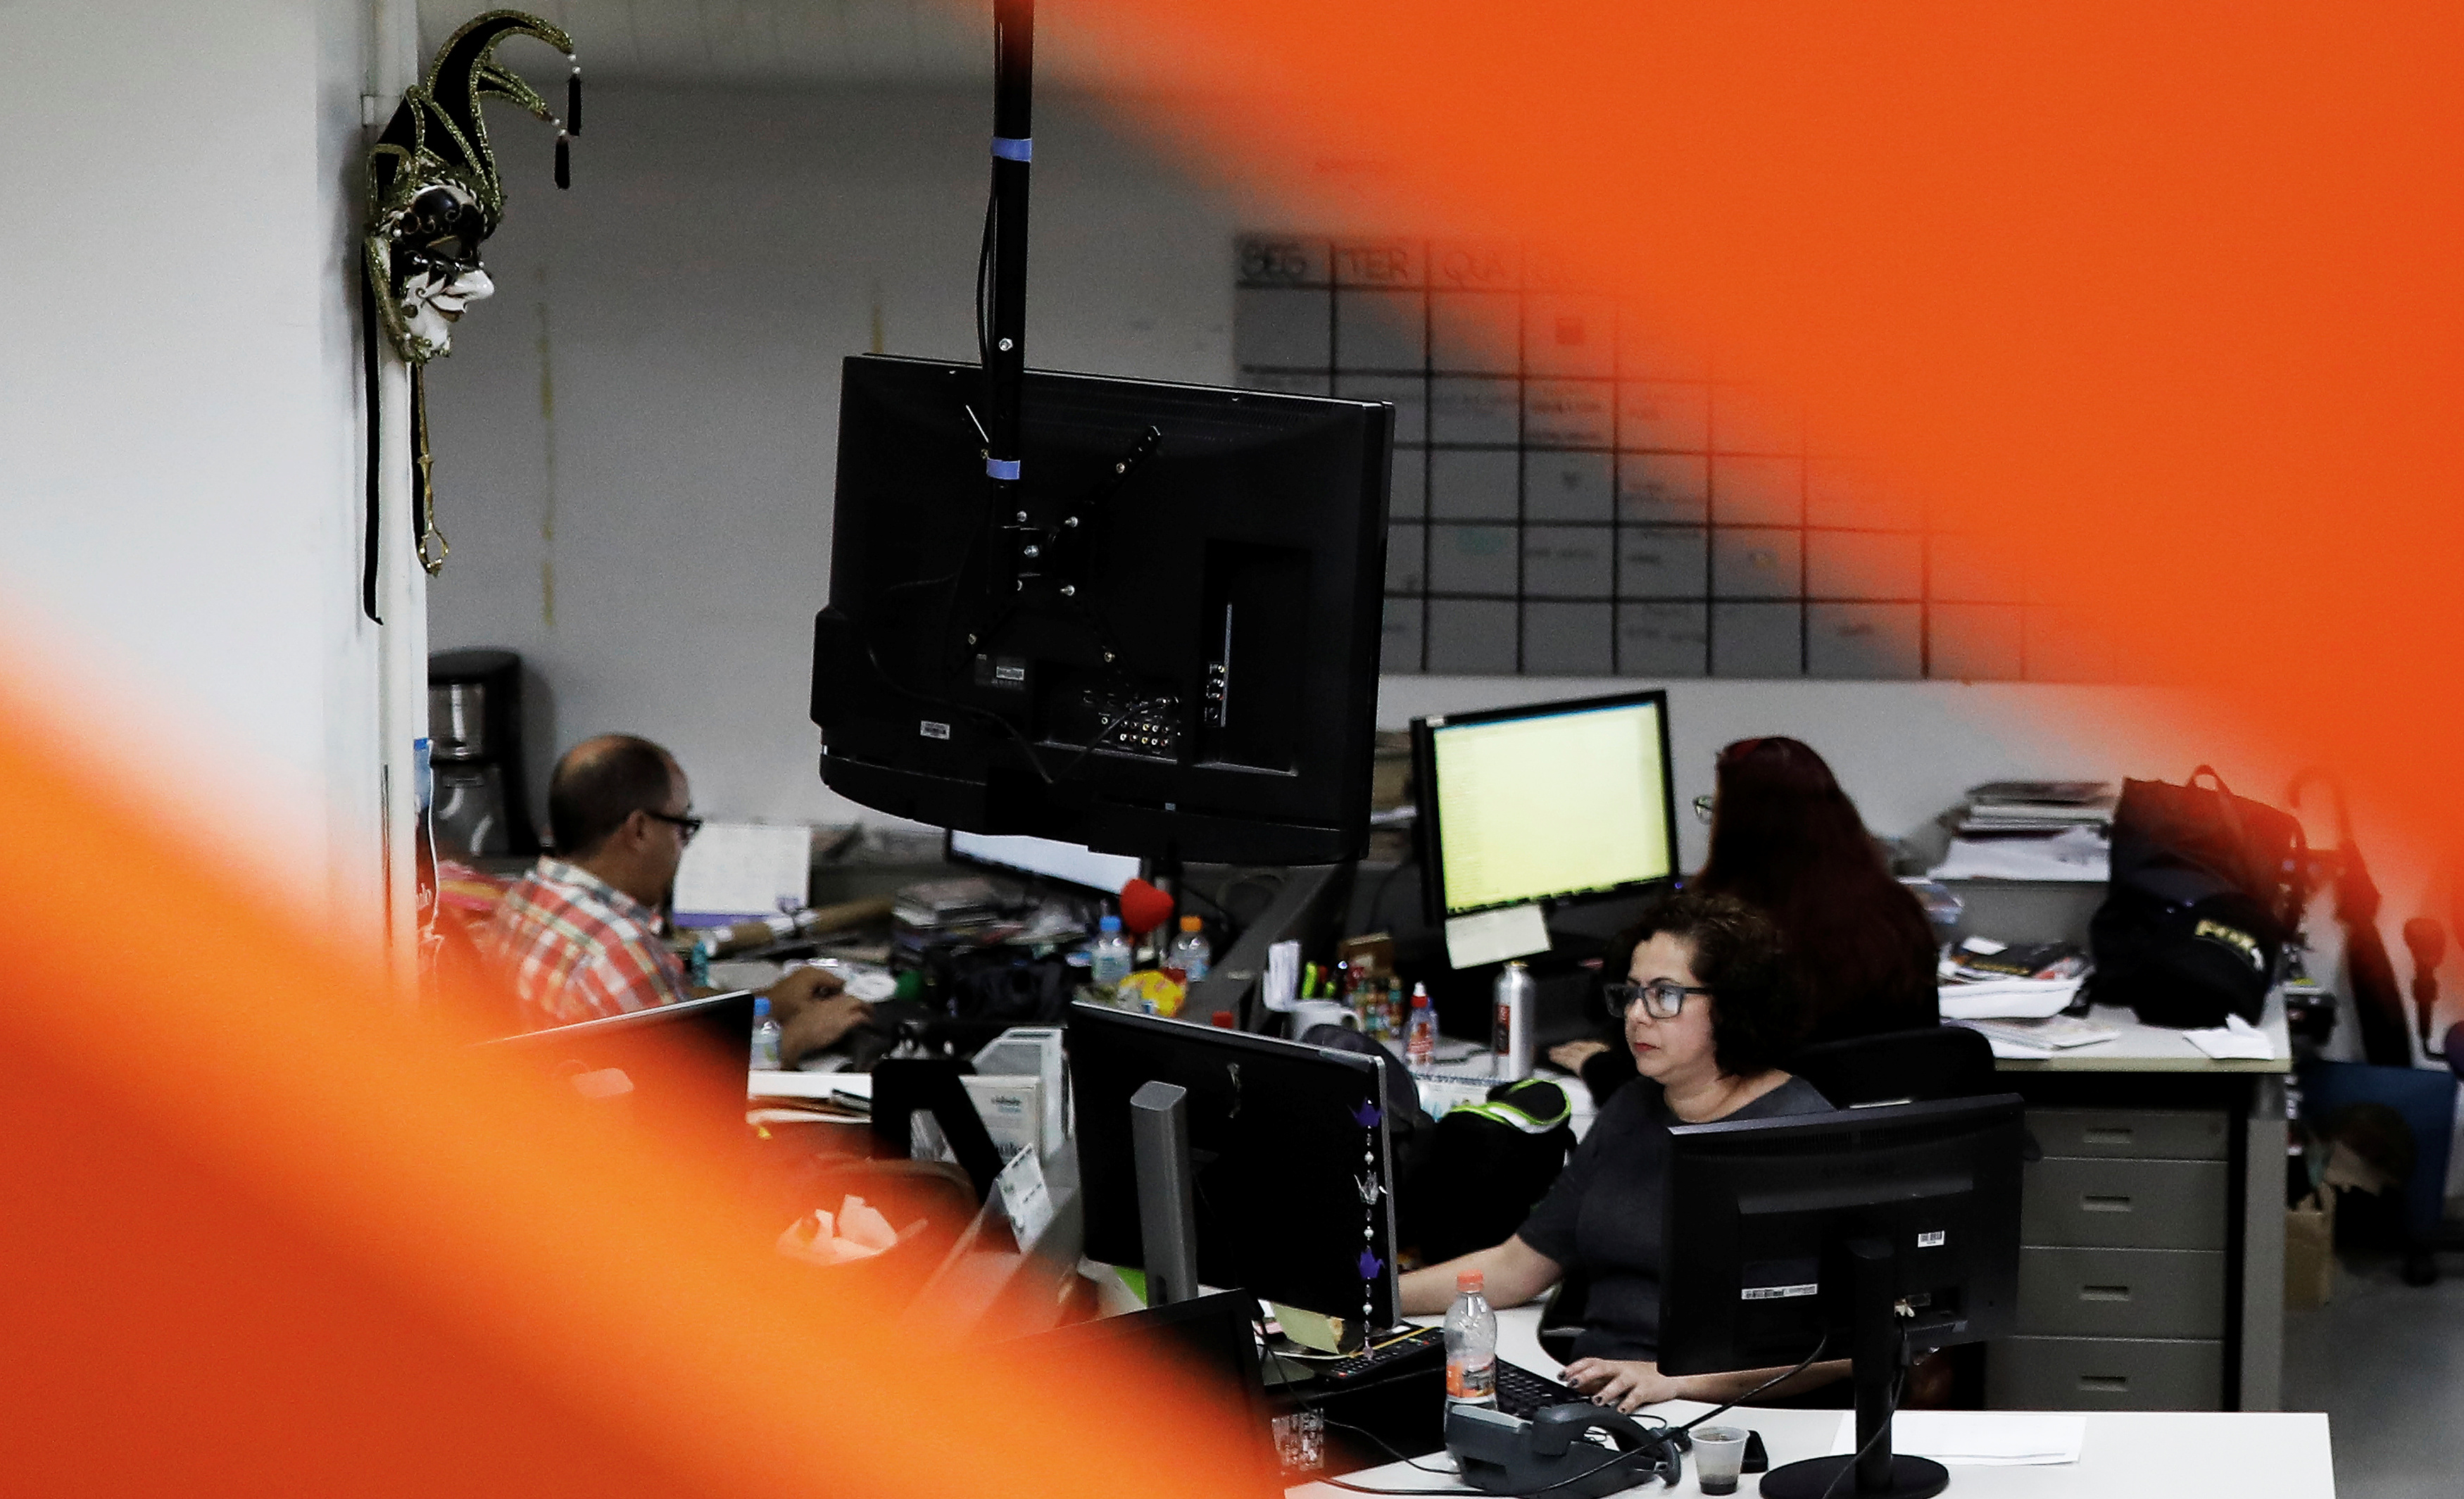 Journalists at the newsroom of 'Folha de S. Paulo' newspaper. REUTERS/Nacho Doce